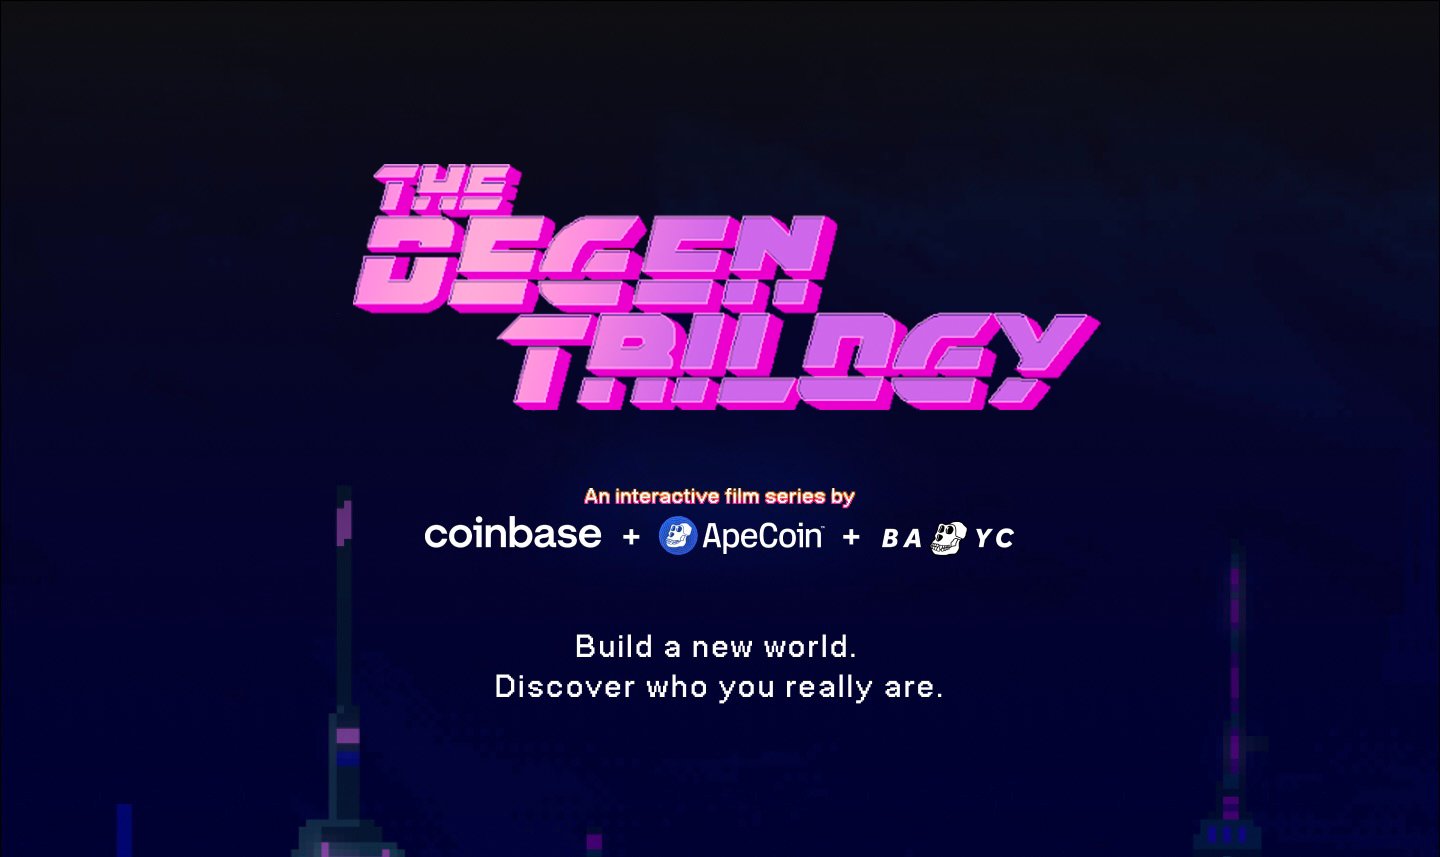 Coinbase夥拍無聊猿發行「電影三部曲」（The Deden Trilogy）。（Twitter網上圖片）